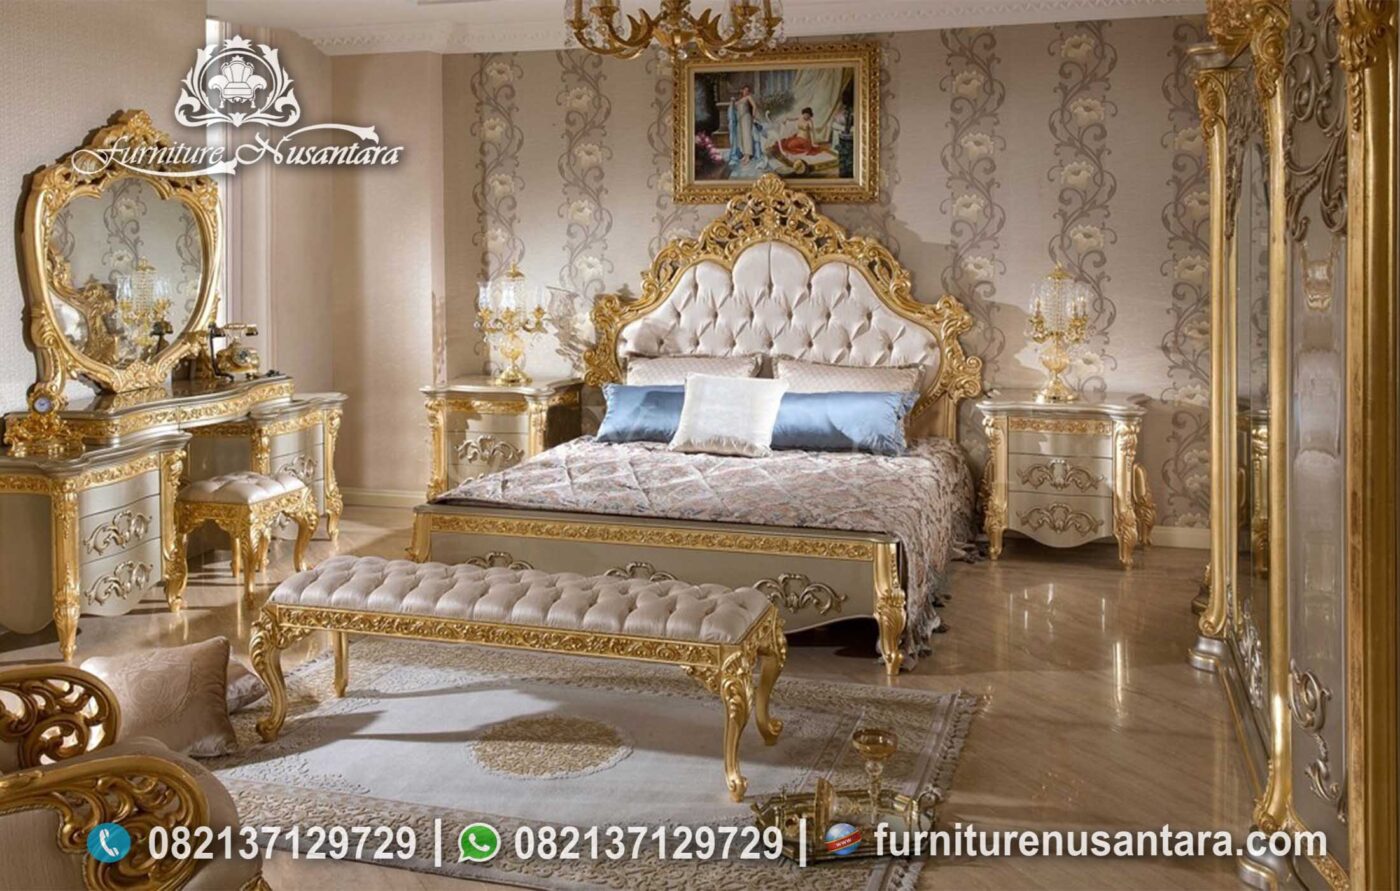 Kamar Set Klasik Princes Gold KS-256, Furniture Nusantara